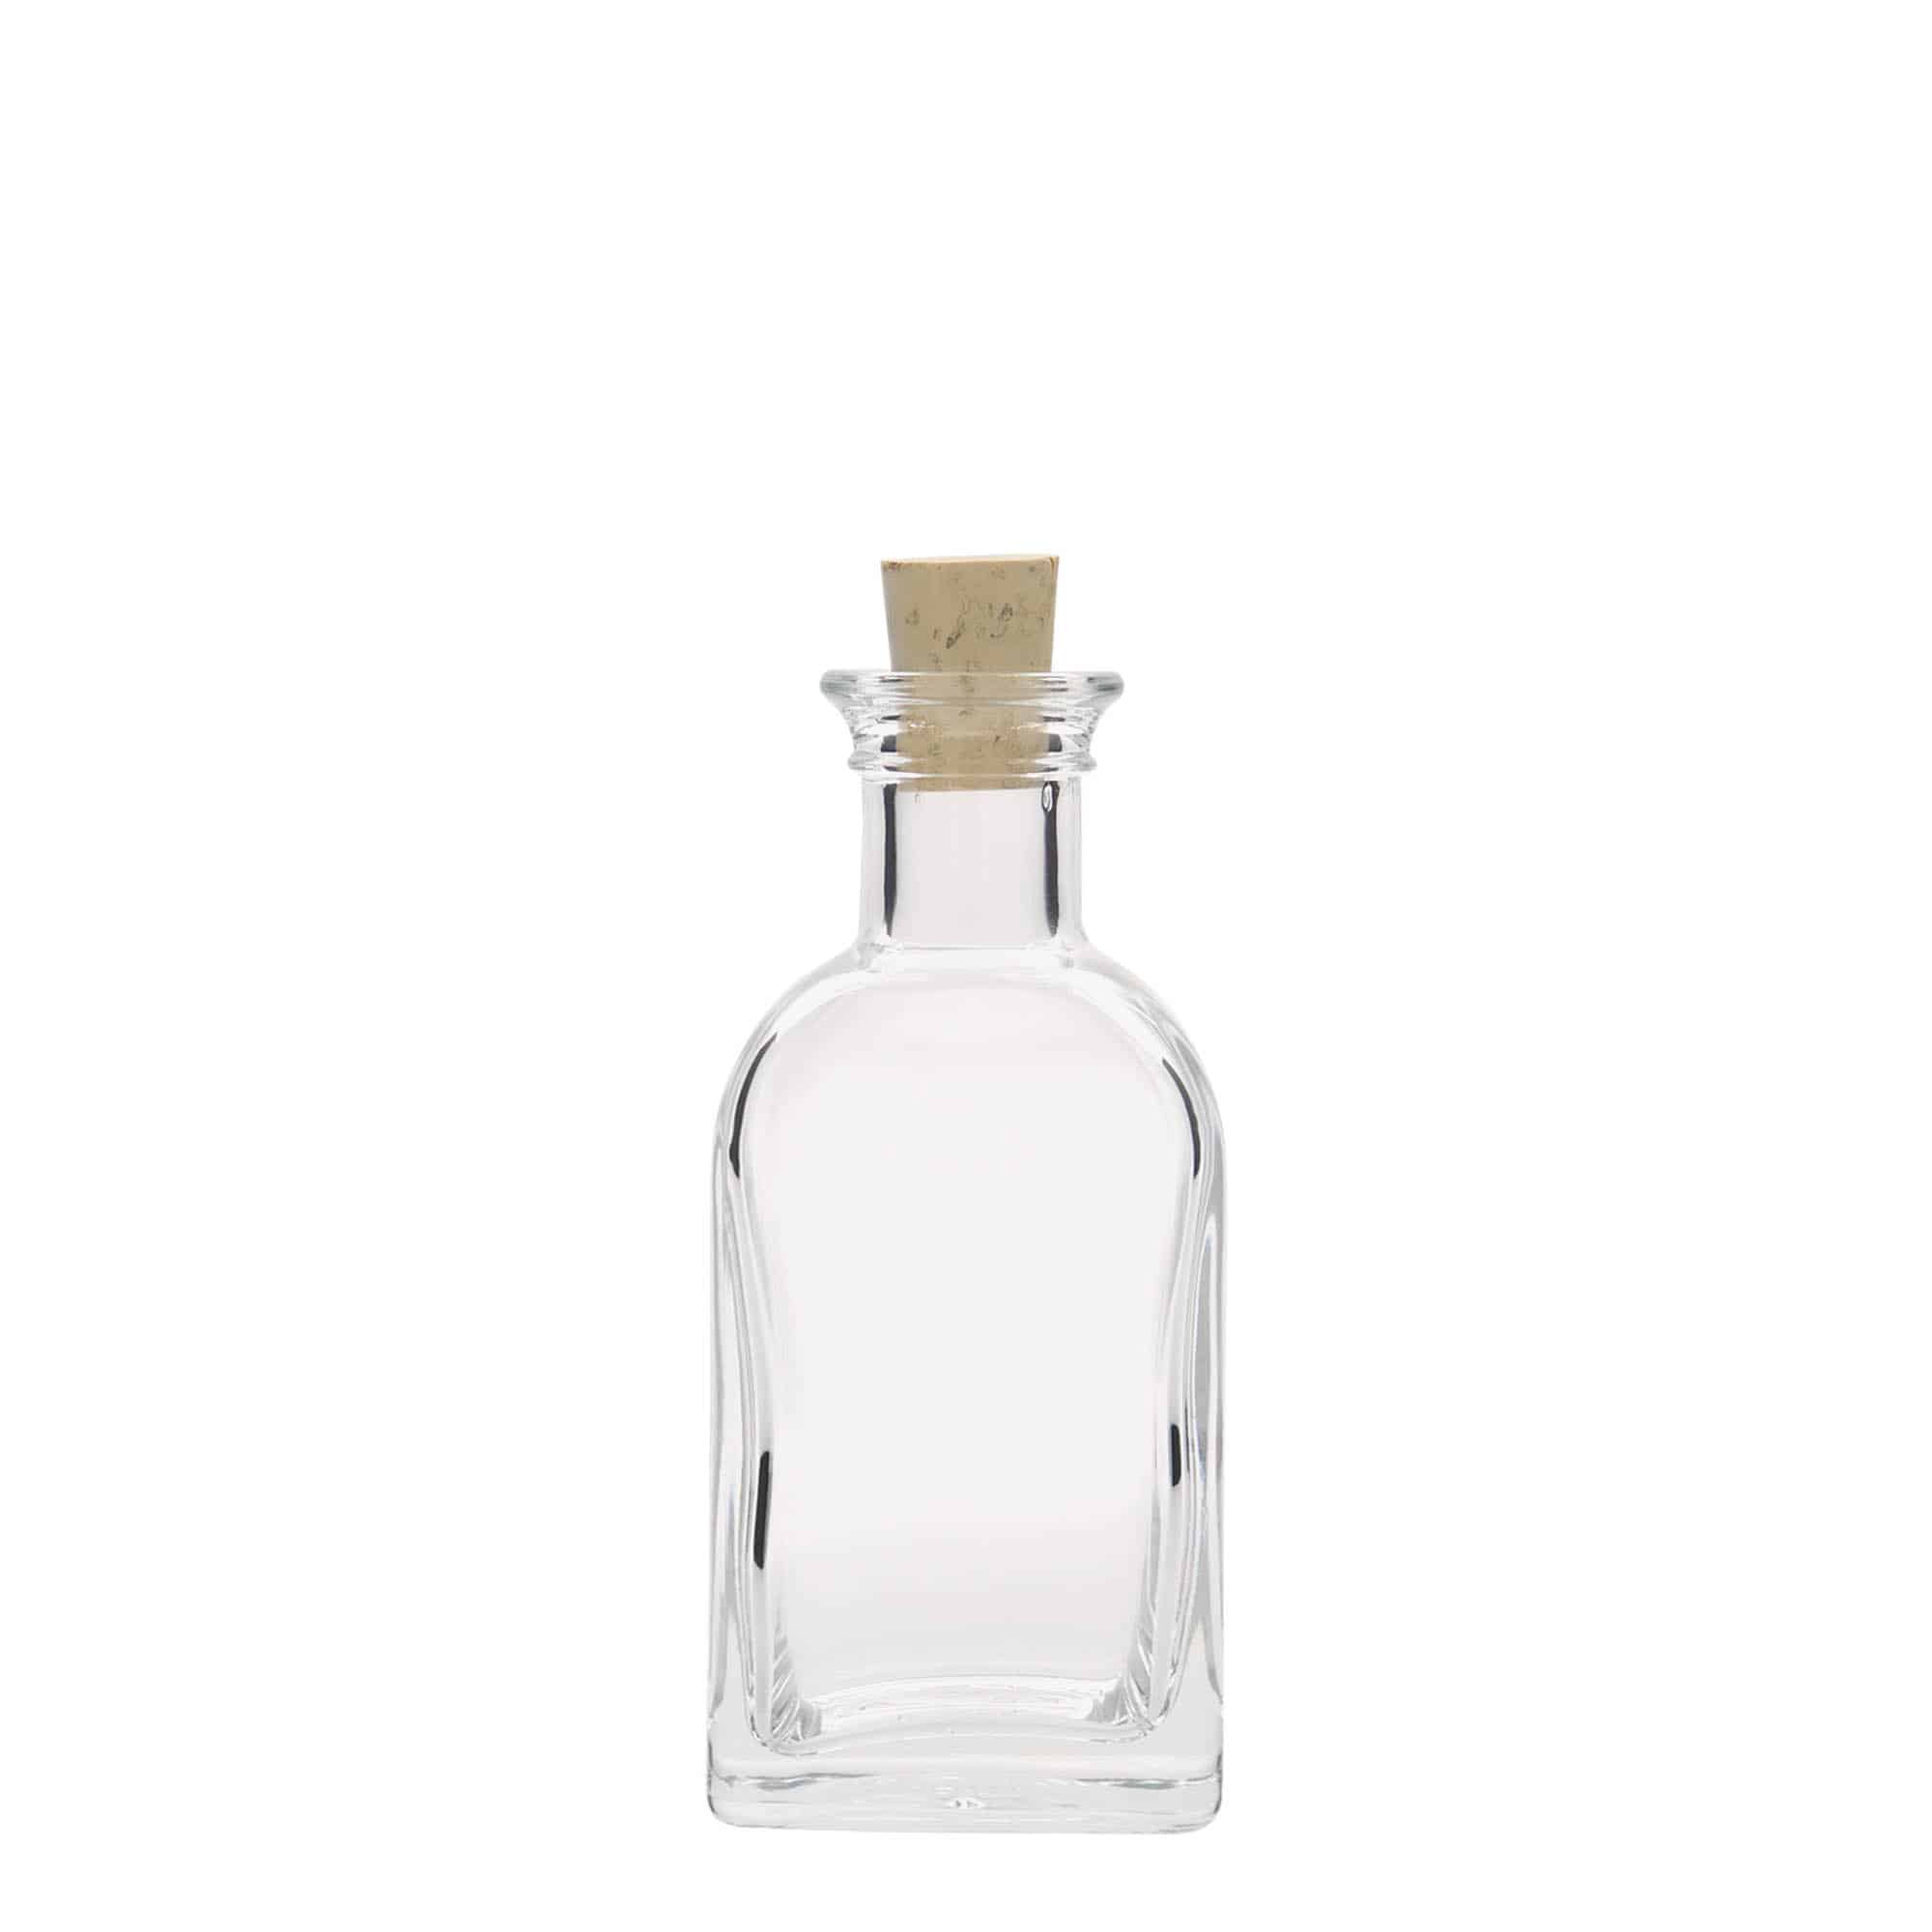 100 ml glass apothecary bottle Carré, square, closure: cork